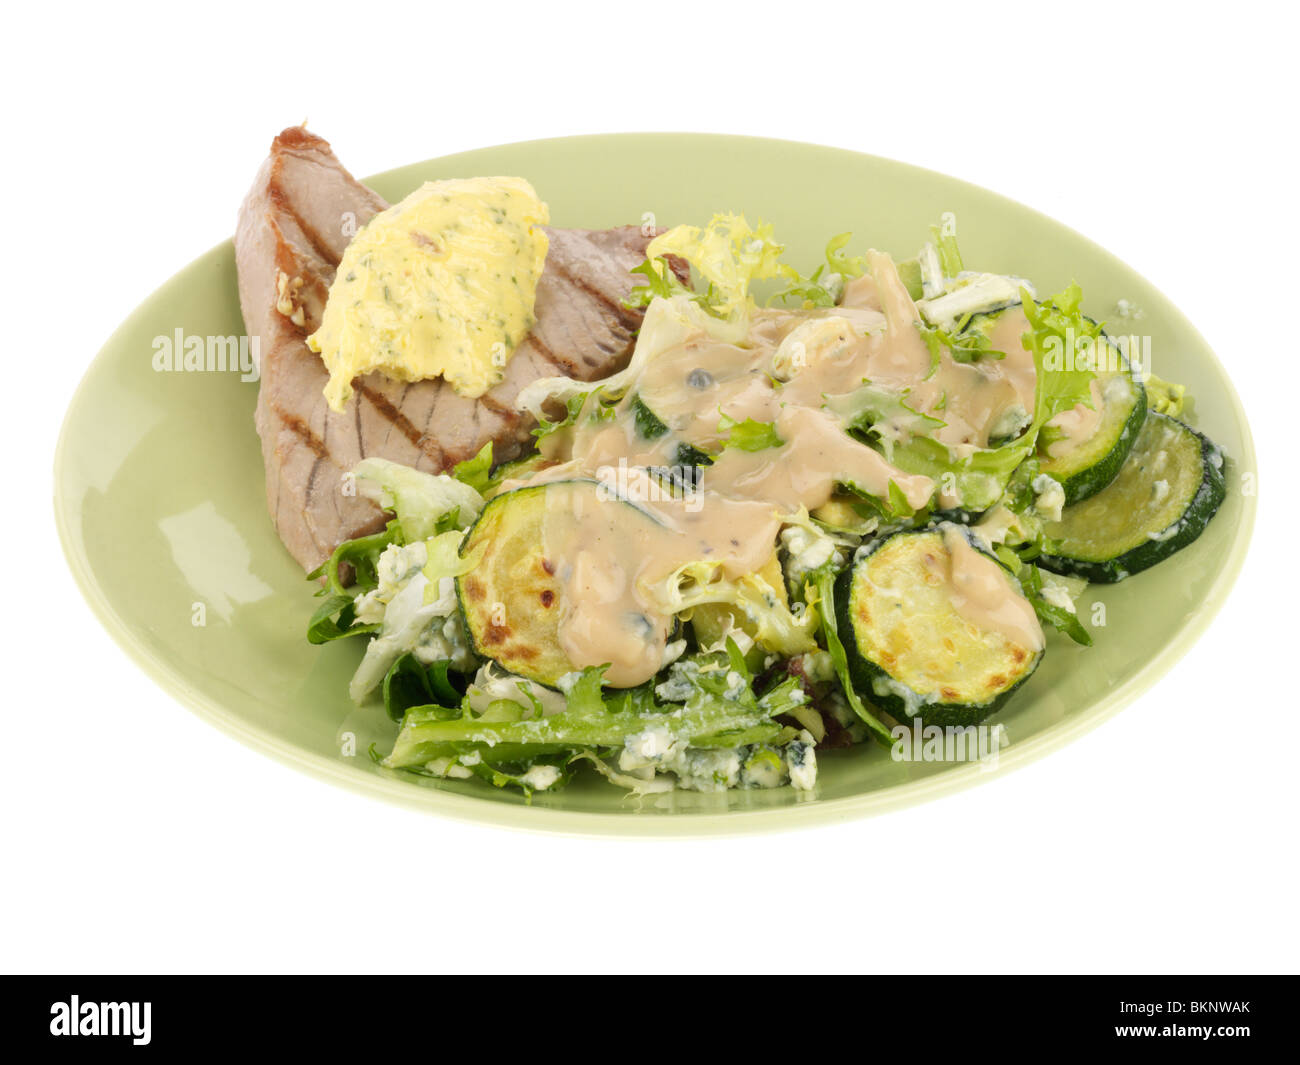 Grilled Tuna Steak with Salad Stock Photo